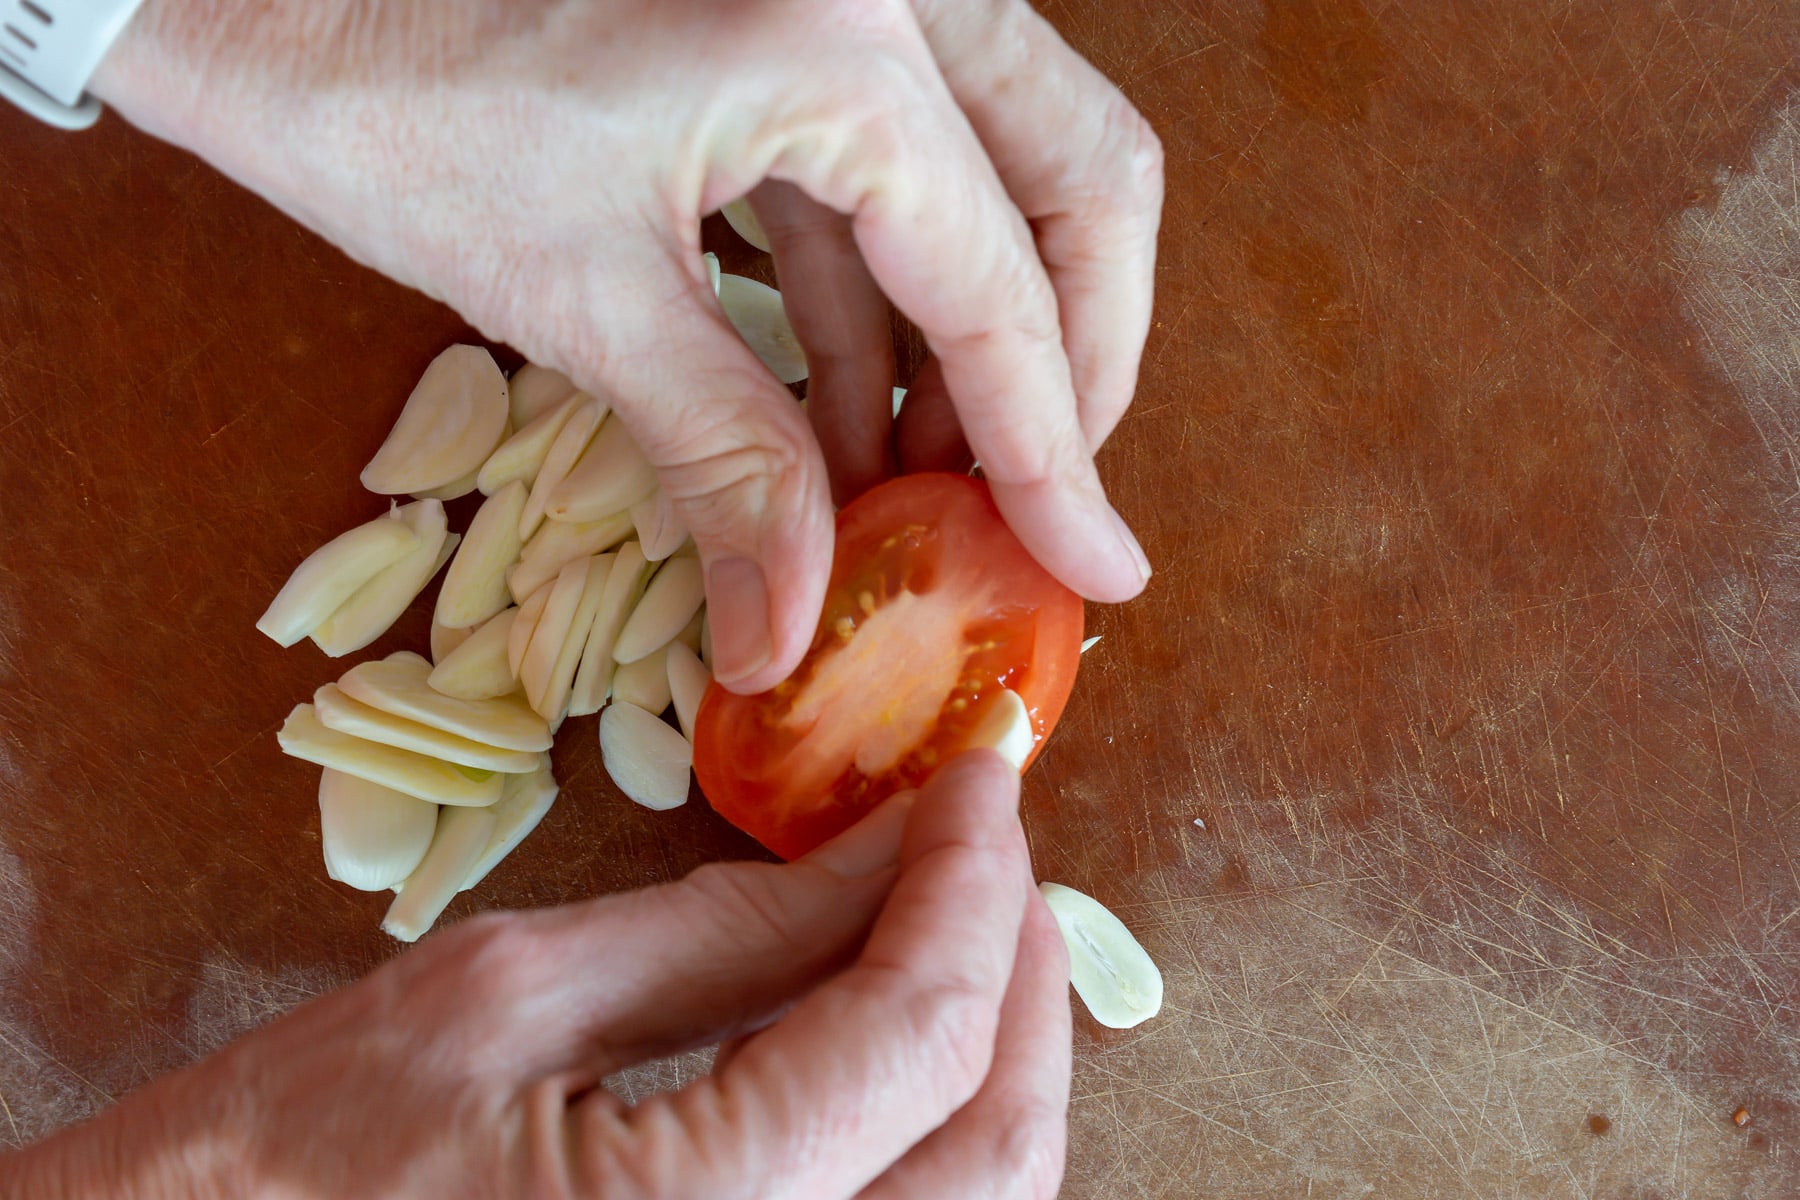 insert a sliver of garlic into tomato half before roasting.